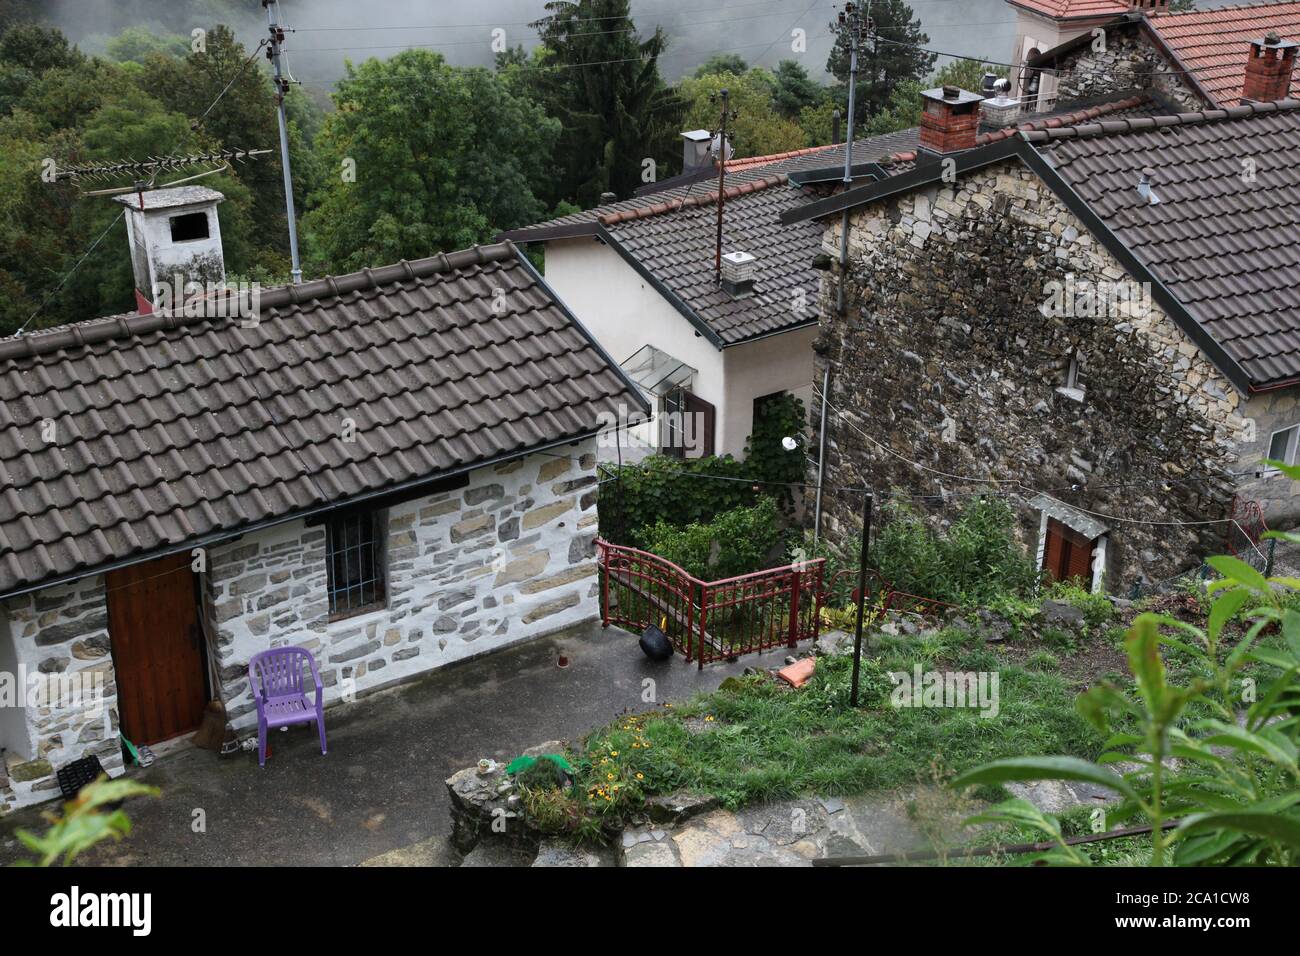 Casima, Kanton Tessin (TI)/ Schweiz - September 29 2013: Dorfszene im Kanton Tessin /Schweiz Stockfoto